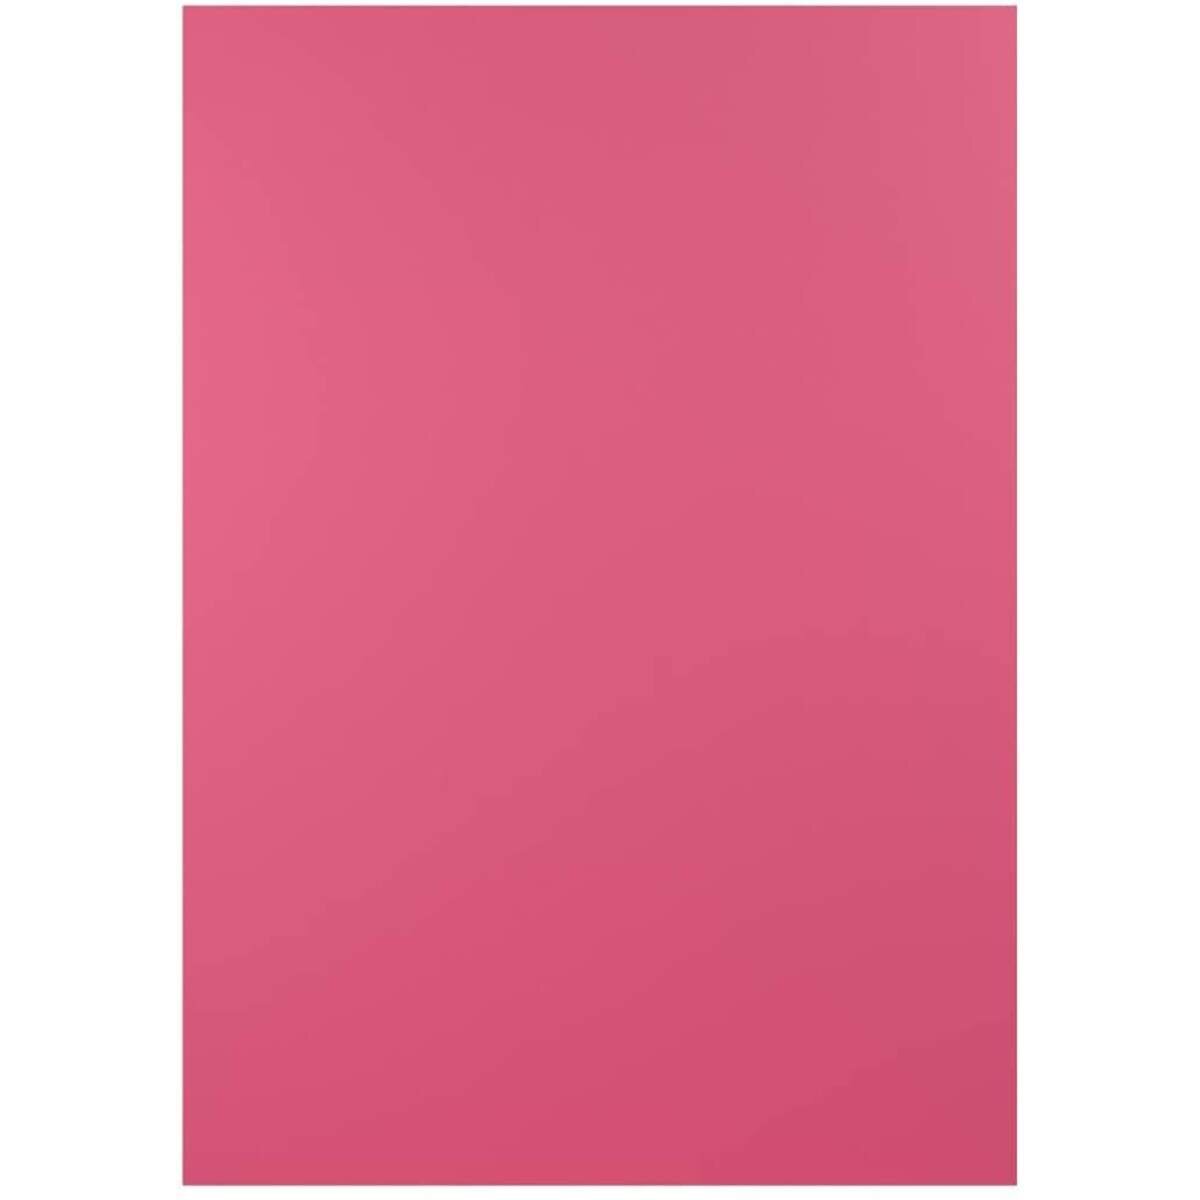 Rössler Coloretti Briefpapier, 165g/m², DIN A4, 10 Blatt, rosa